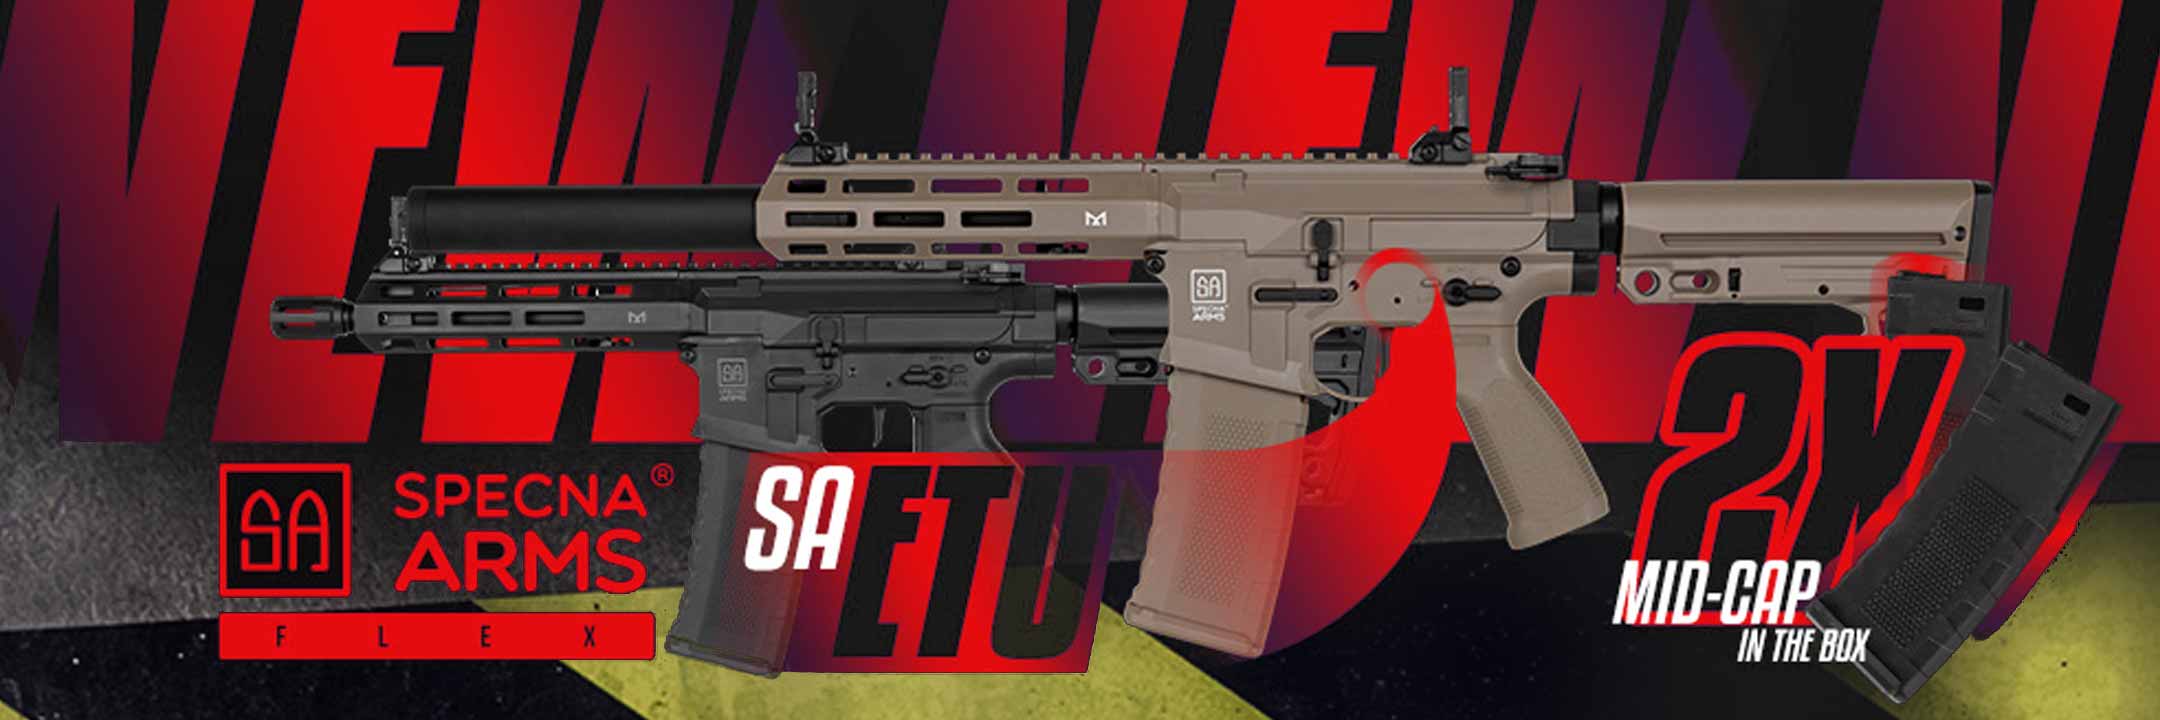 New Specna Arms FLEX airsoft guns with ETU